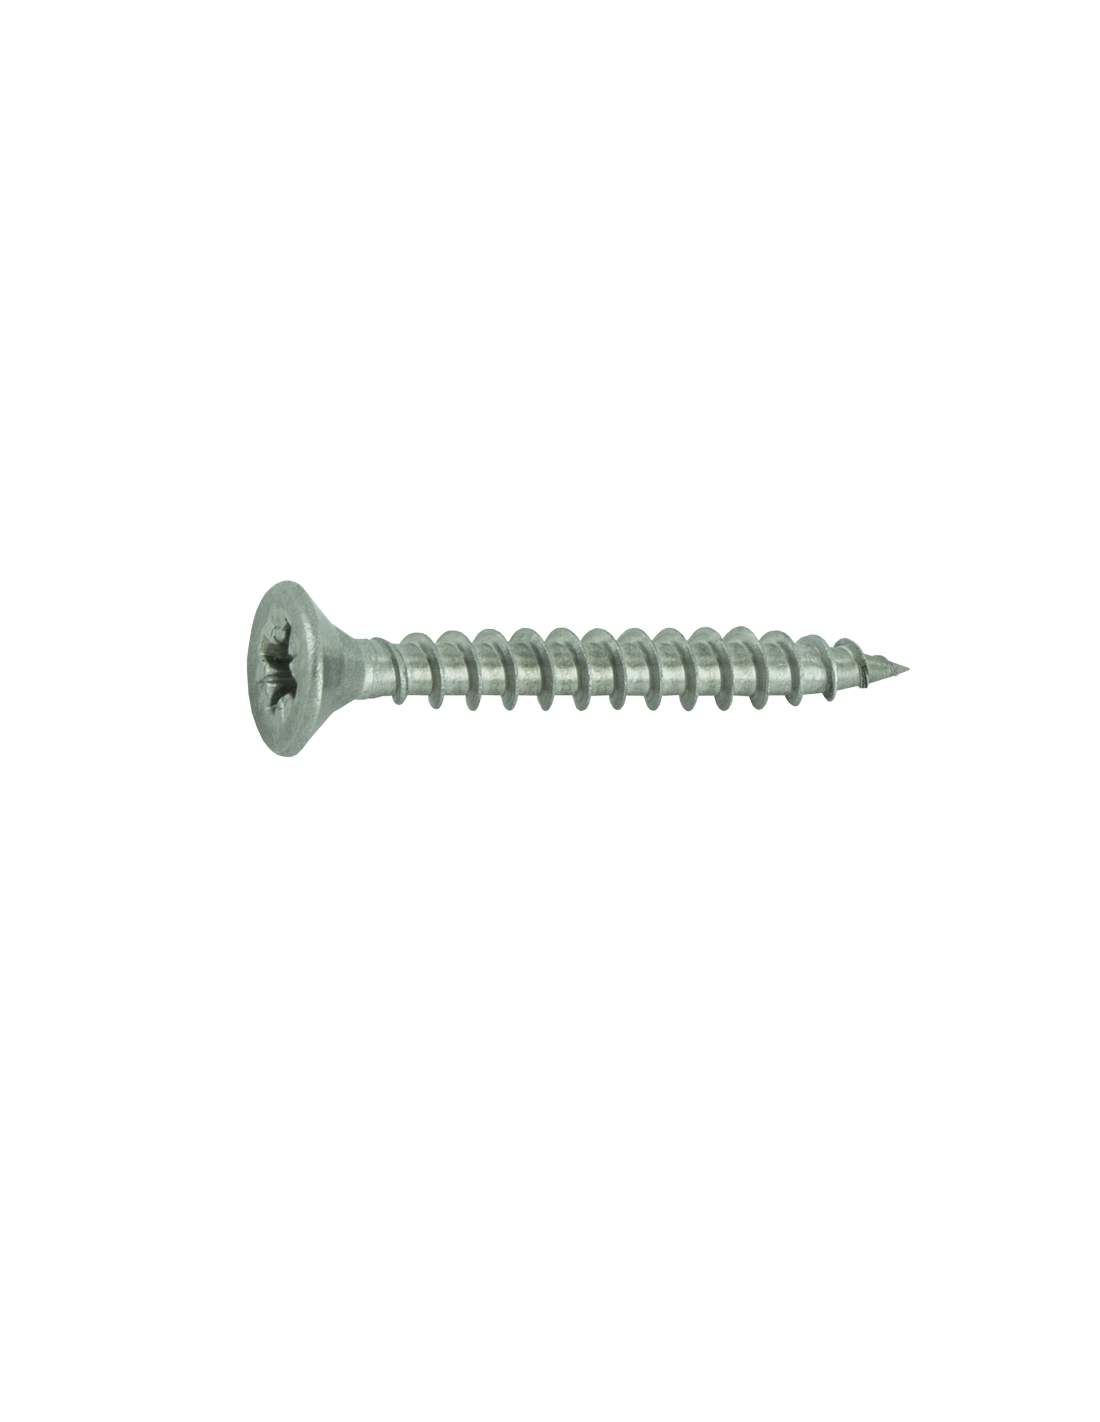 Stainless steel Pozidriv countersunk head screws A2 6x50, 16 pcs.